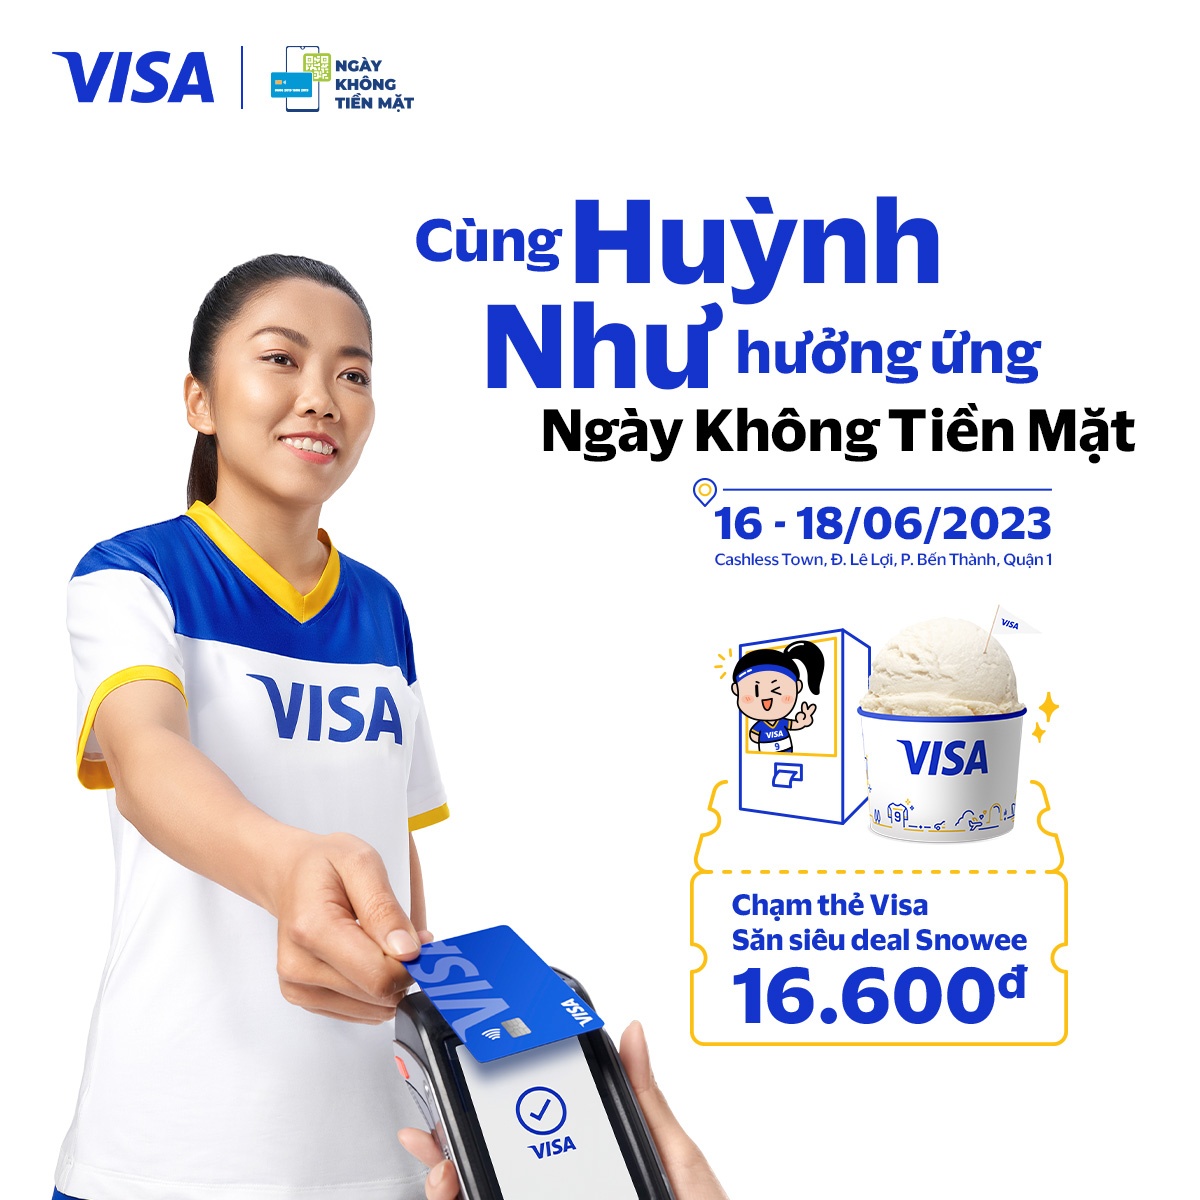 Visa joins Vietnam’s 5th Cashless Day celebration